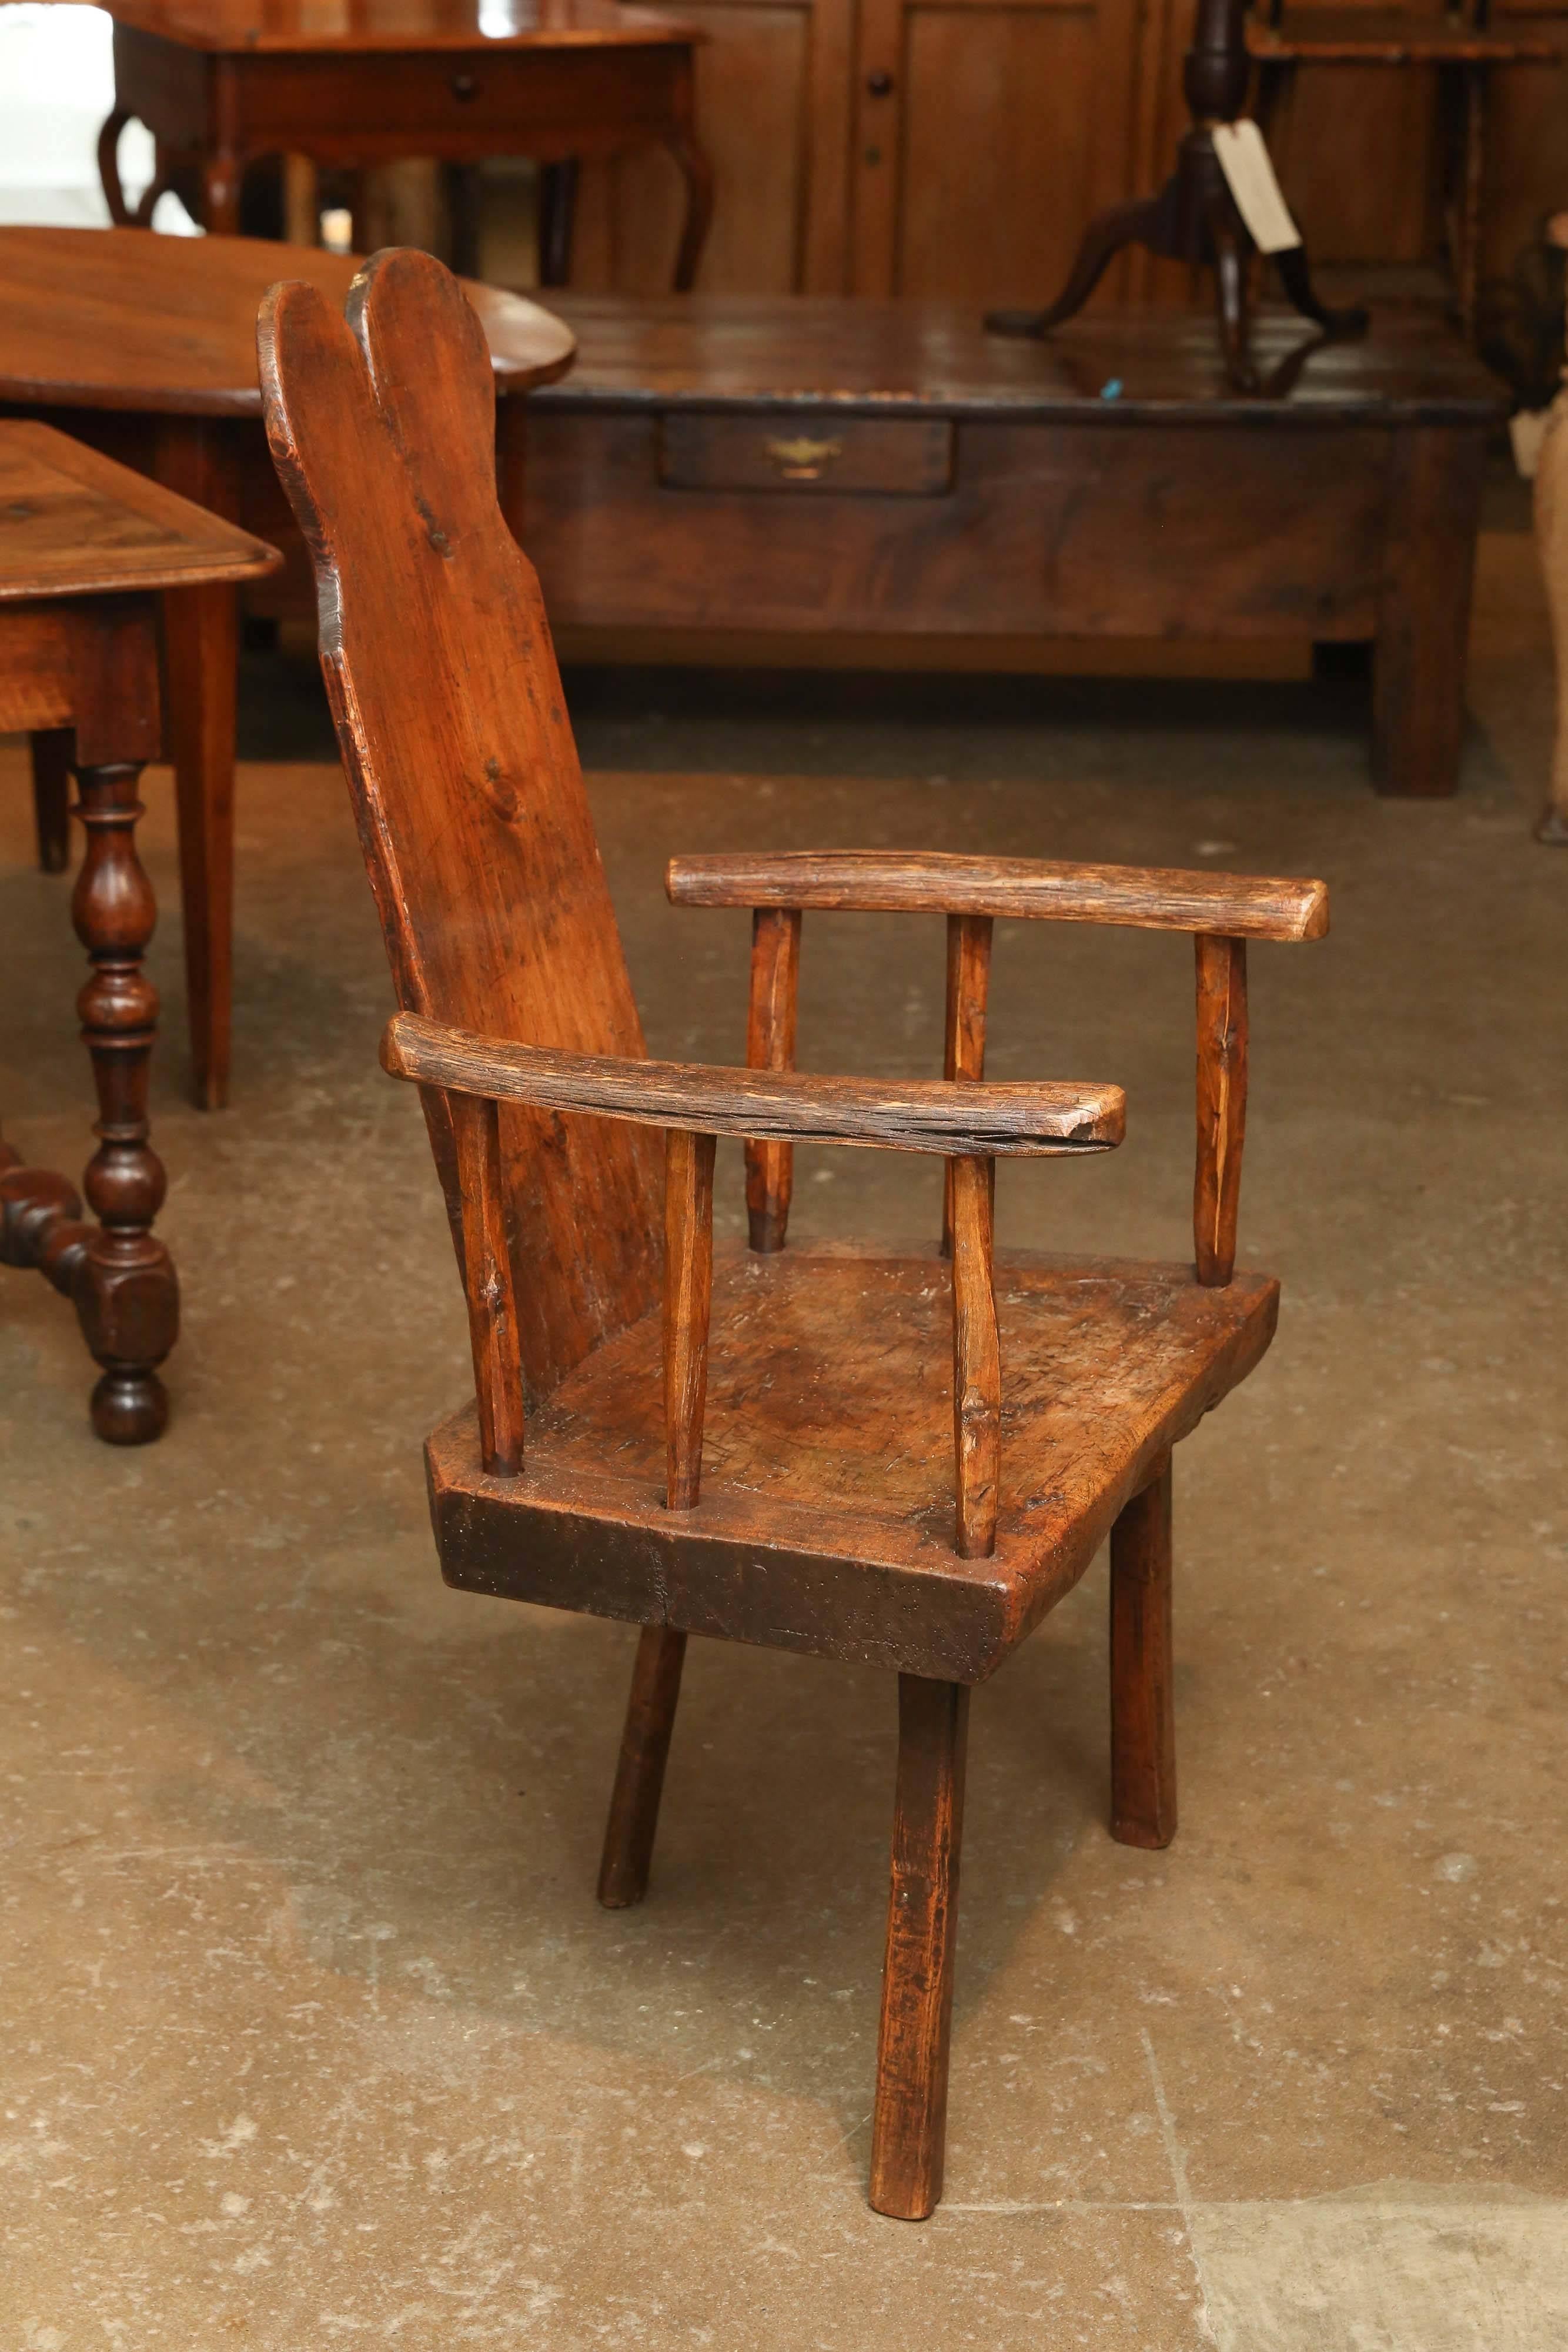 18th century chestnut folk art chair with three legs, a 2.75